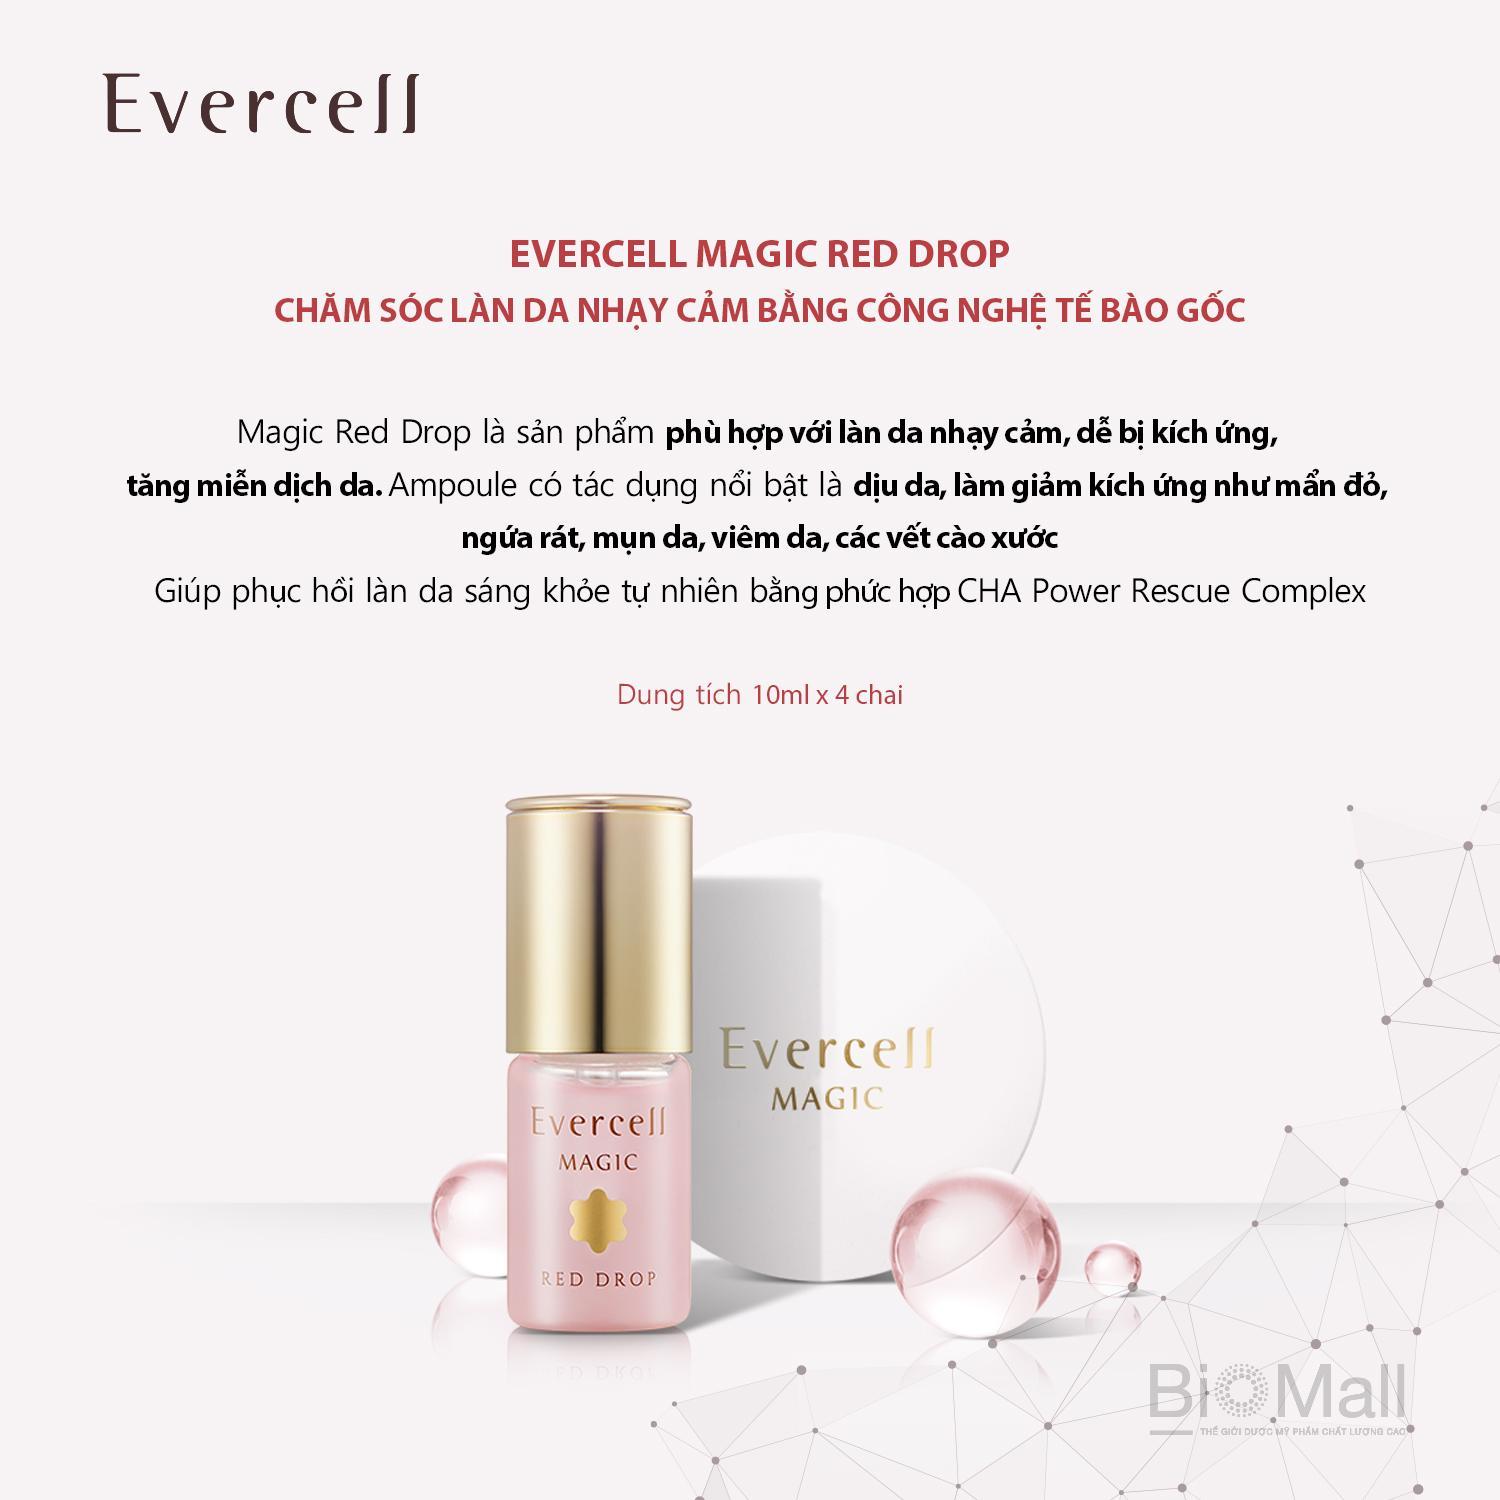 Evercell Magic Red Drop 4 chai x 10ml